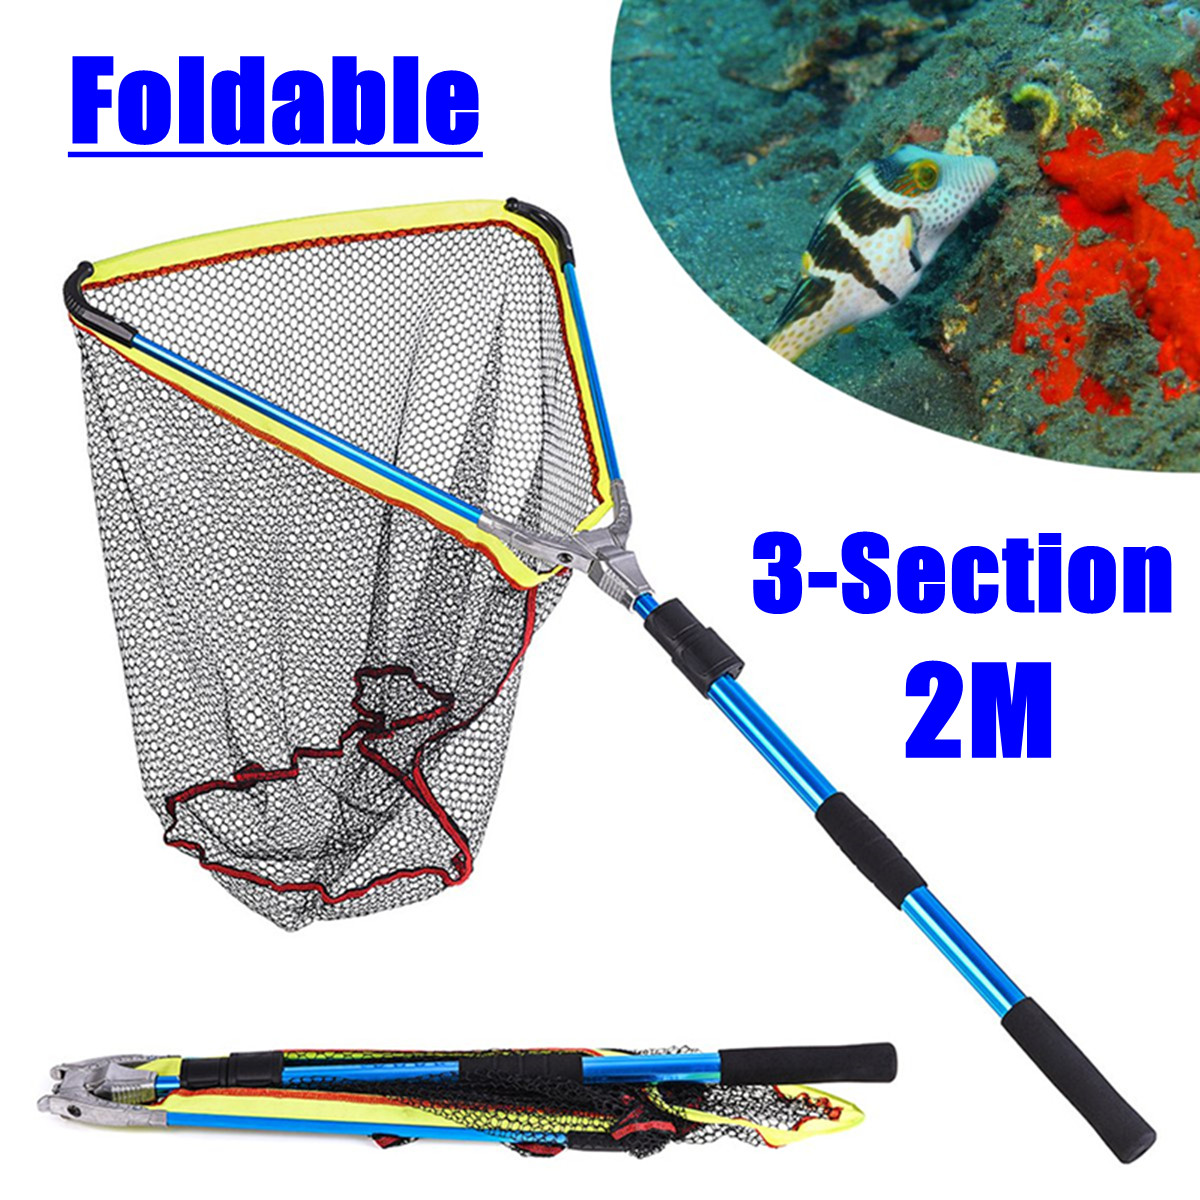 3-Section-Folding-EVA-Handle-Fishing-Landing-Telescopic-Extending-Pole-Fish-Net-1397587-1